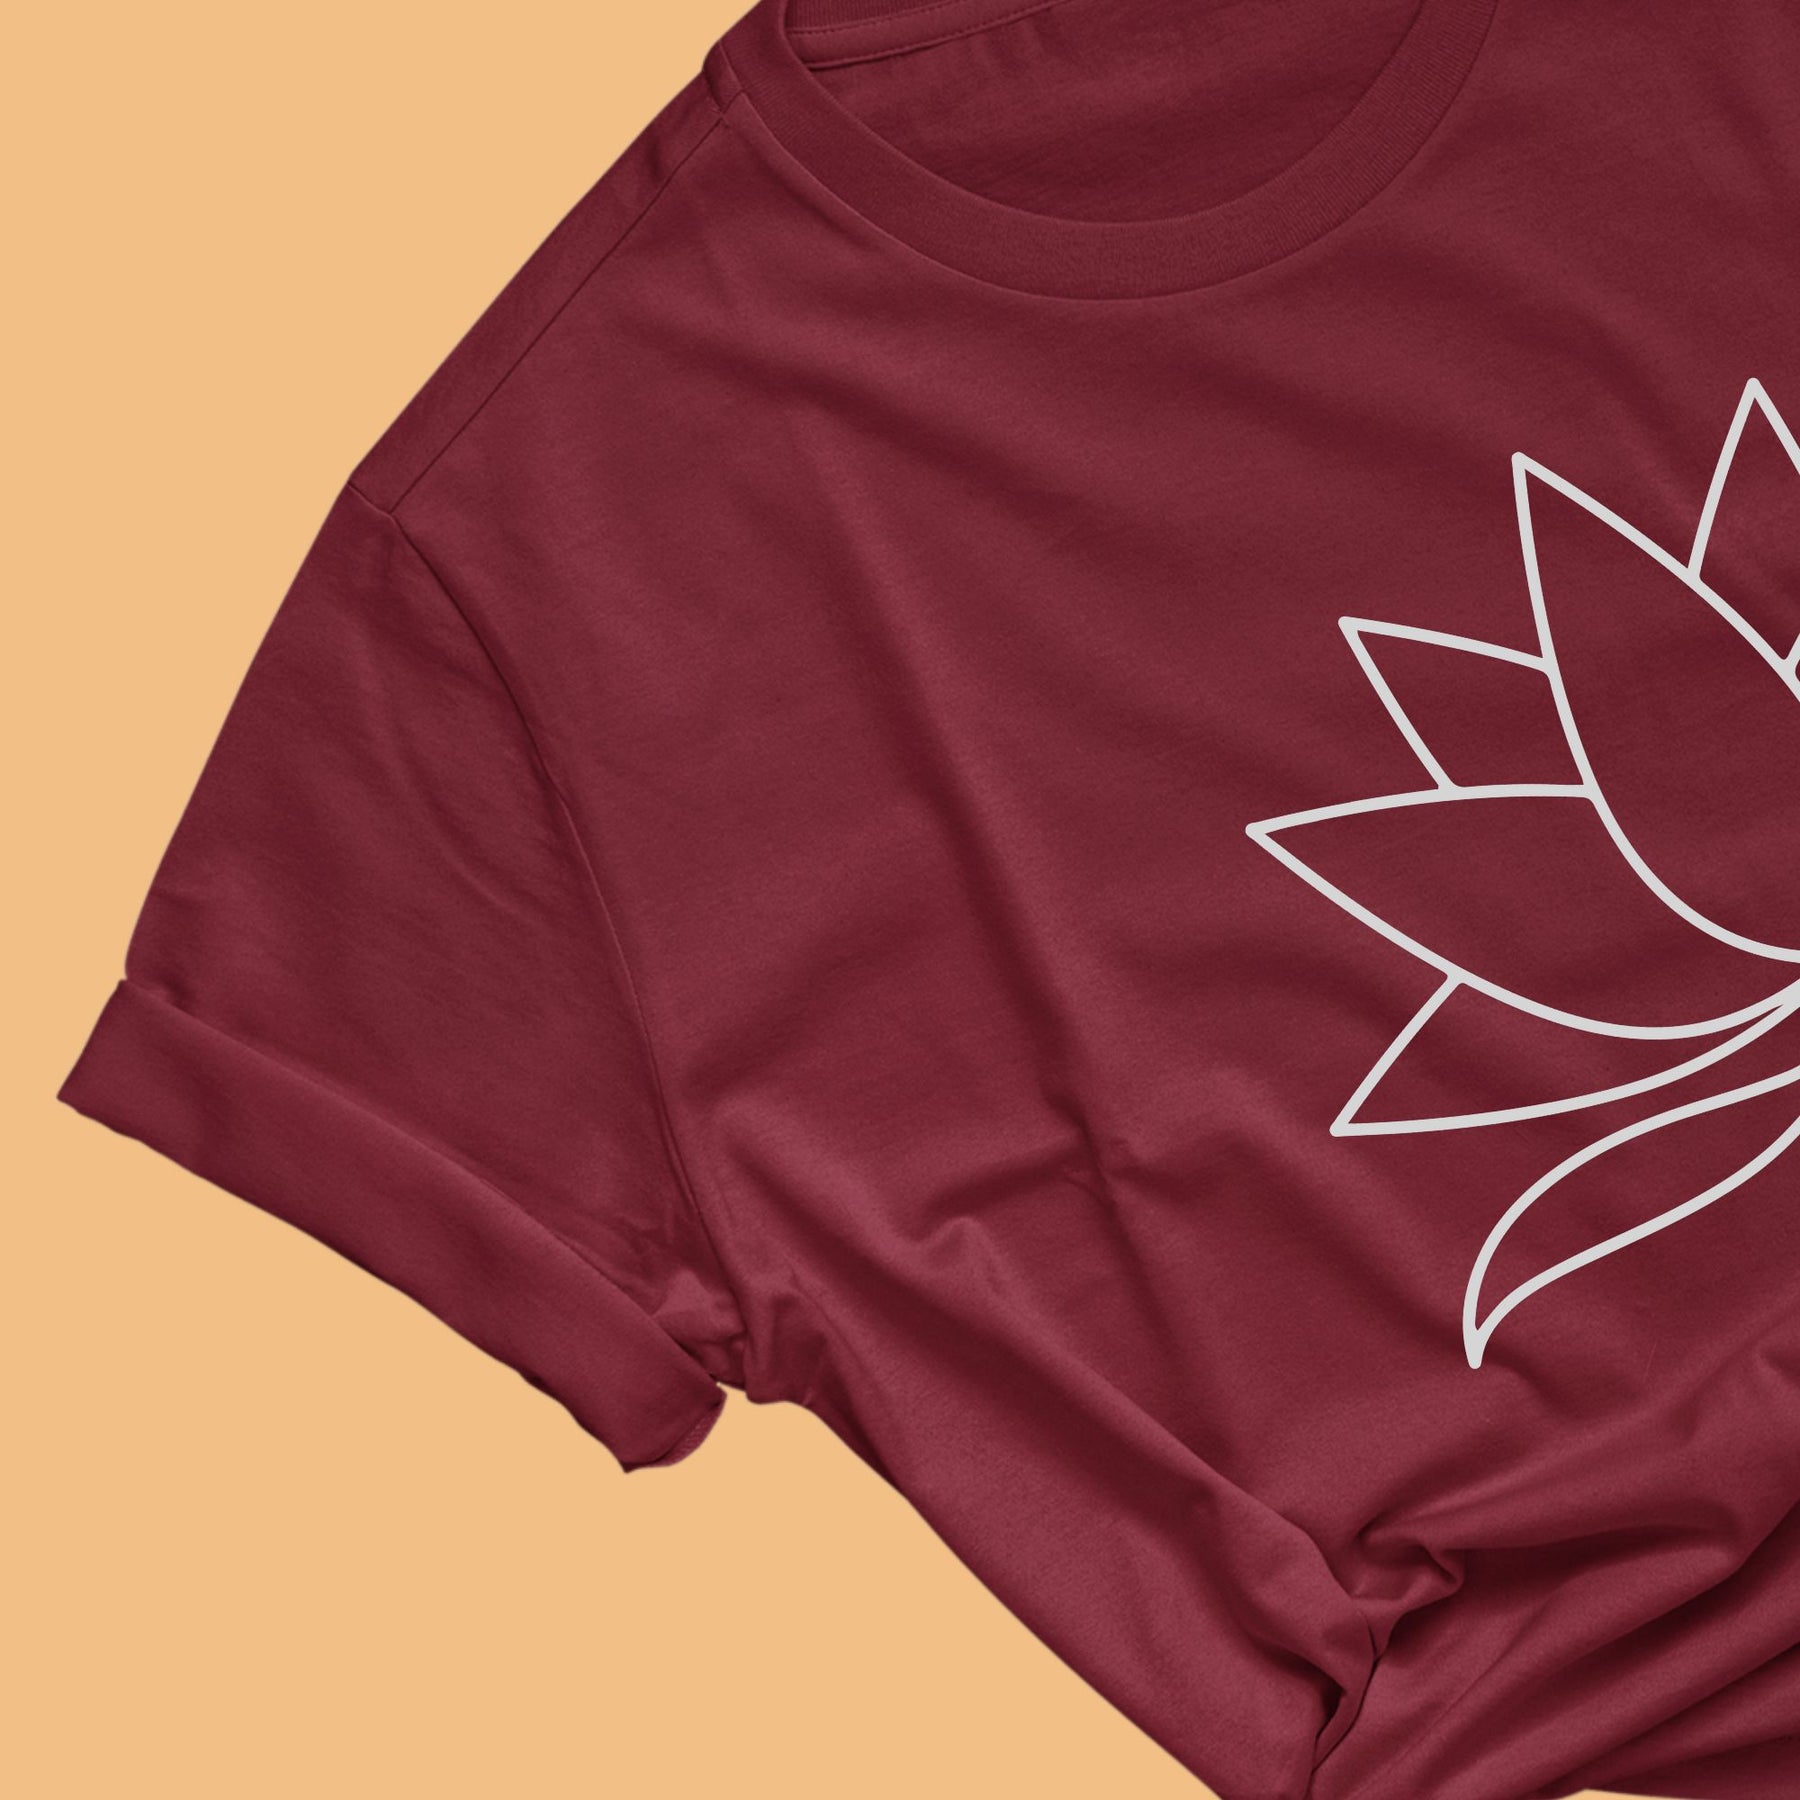  Leaf Design Kids' T-Shirt - Print T-Shirt - Themed Tee